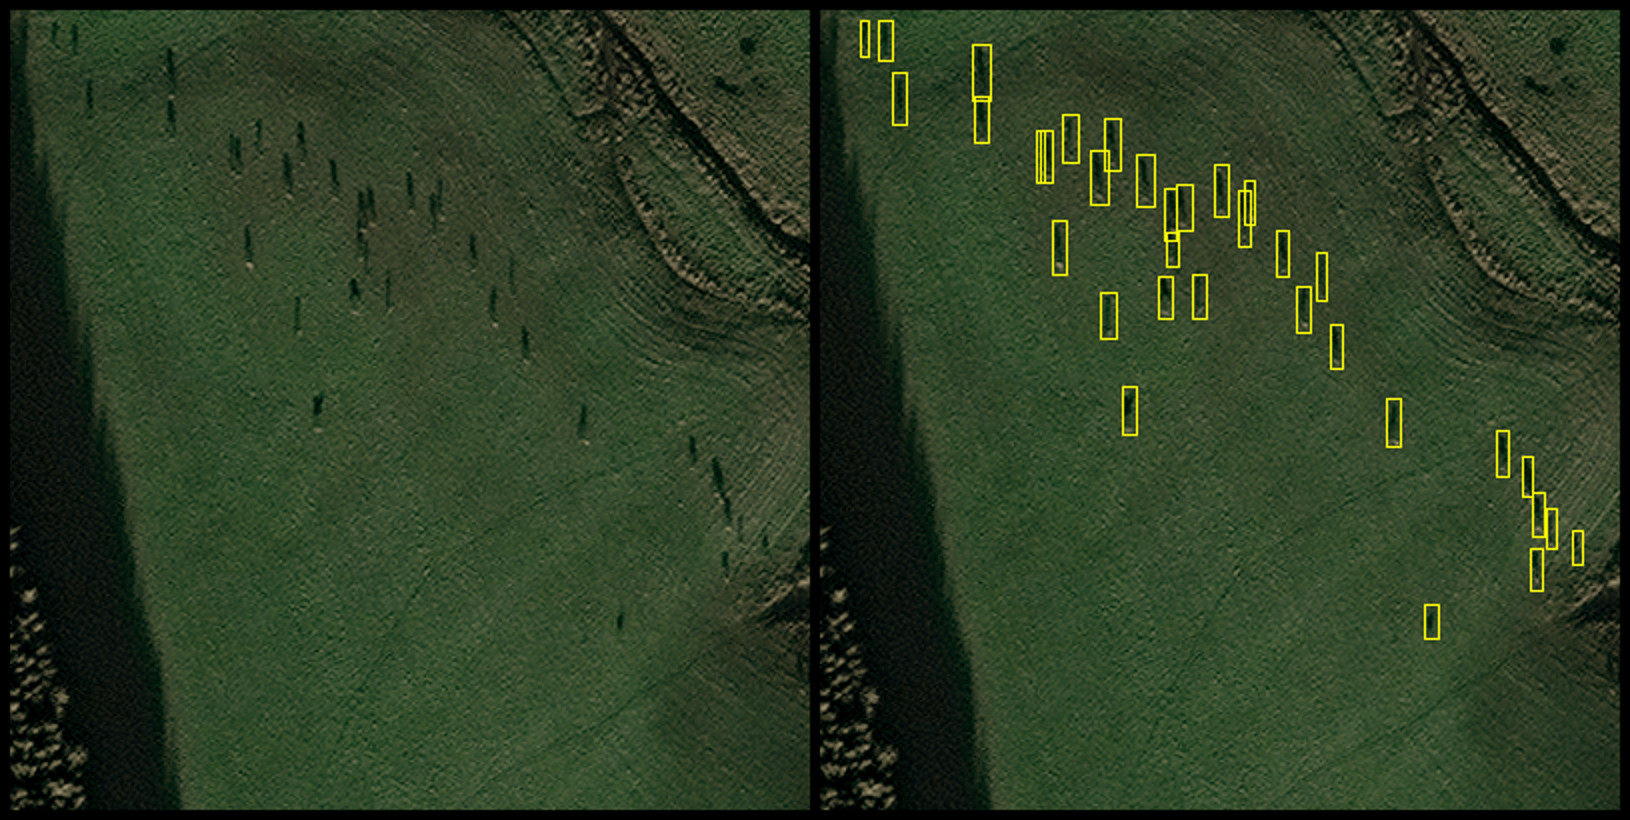 Aerial satellite image showing Scottish deer identified by yellow squares.